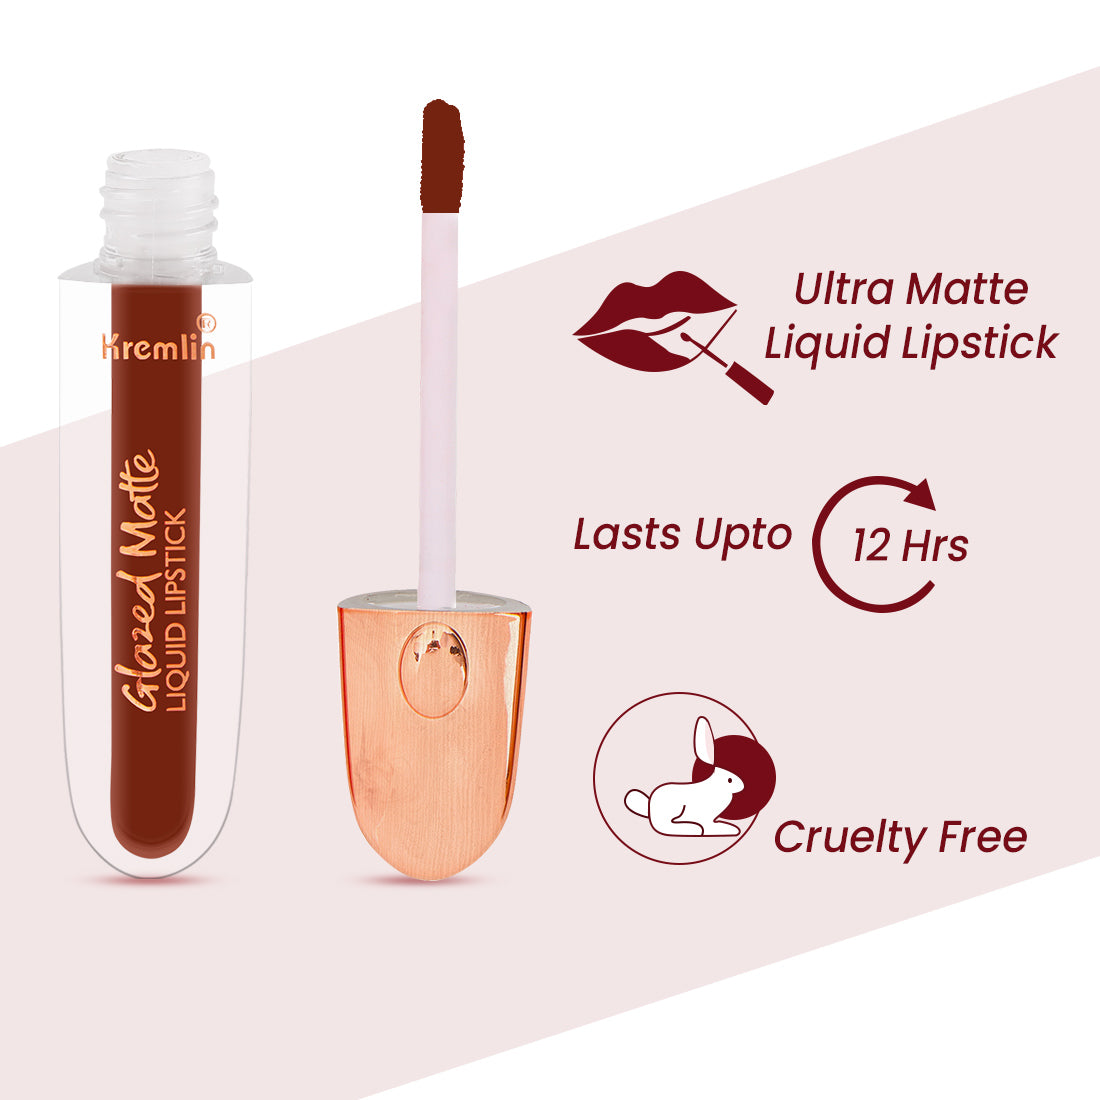 Kremlin Glazed Matte Liquid Lipstick Lips Pack of 2 (Chilling Lips, Normally Nude)